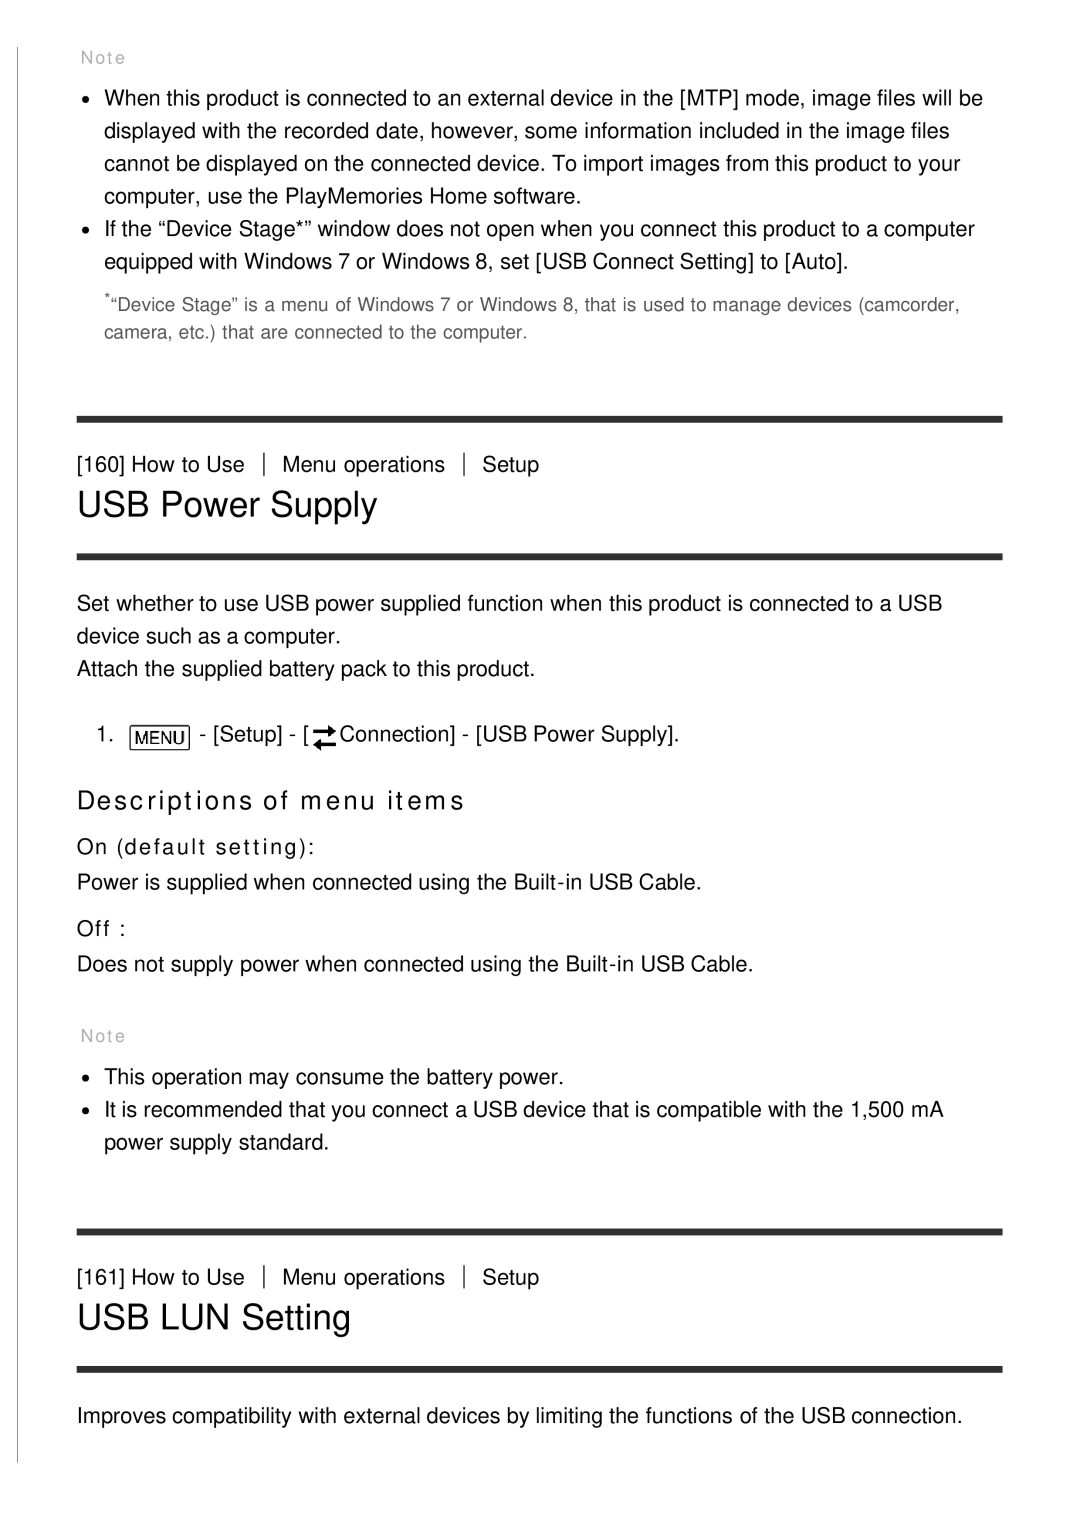 Sony HDR-CX900E, FDR-AX100E manual USB Power Supply, USB LUN Setting, Descriptions of menu items, On default setting 